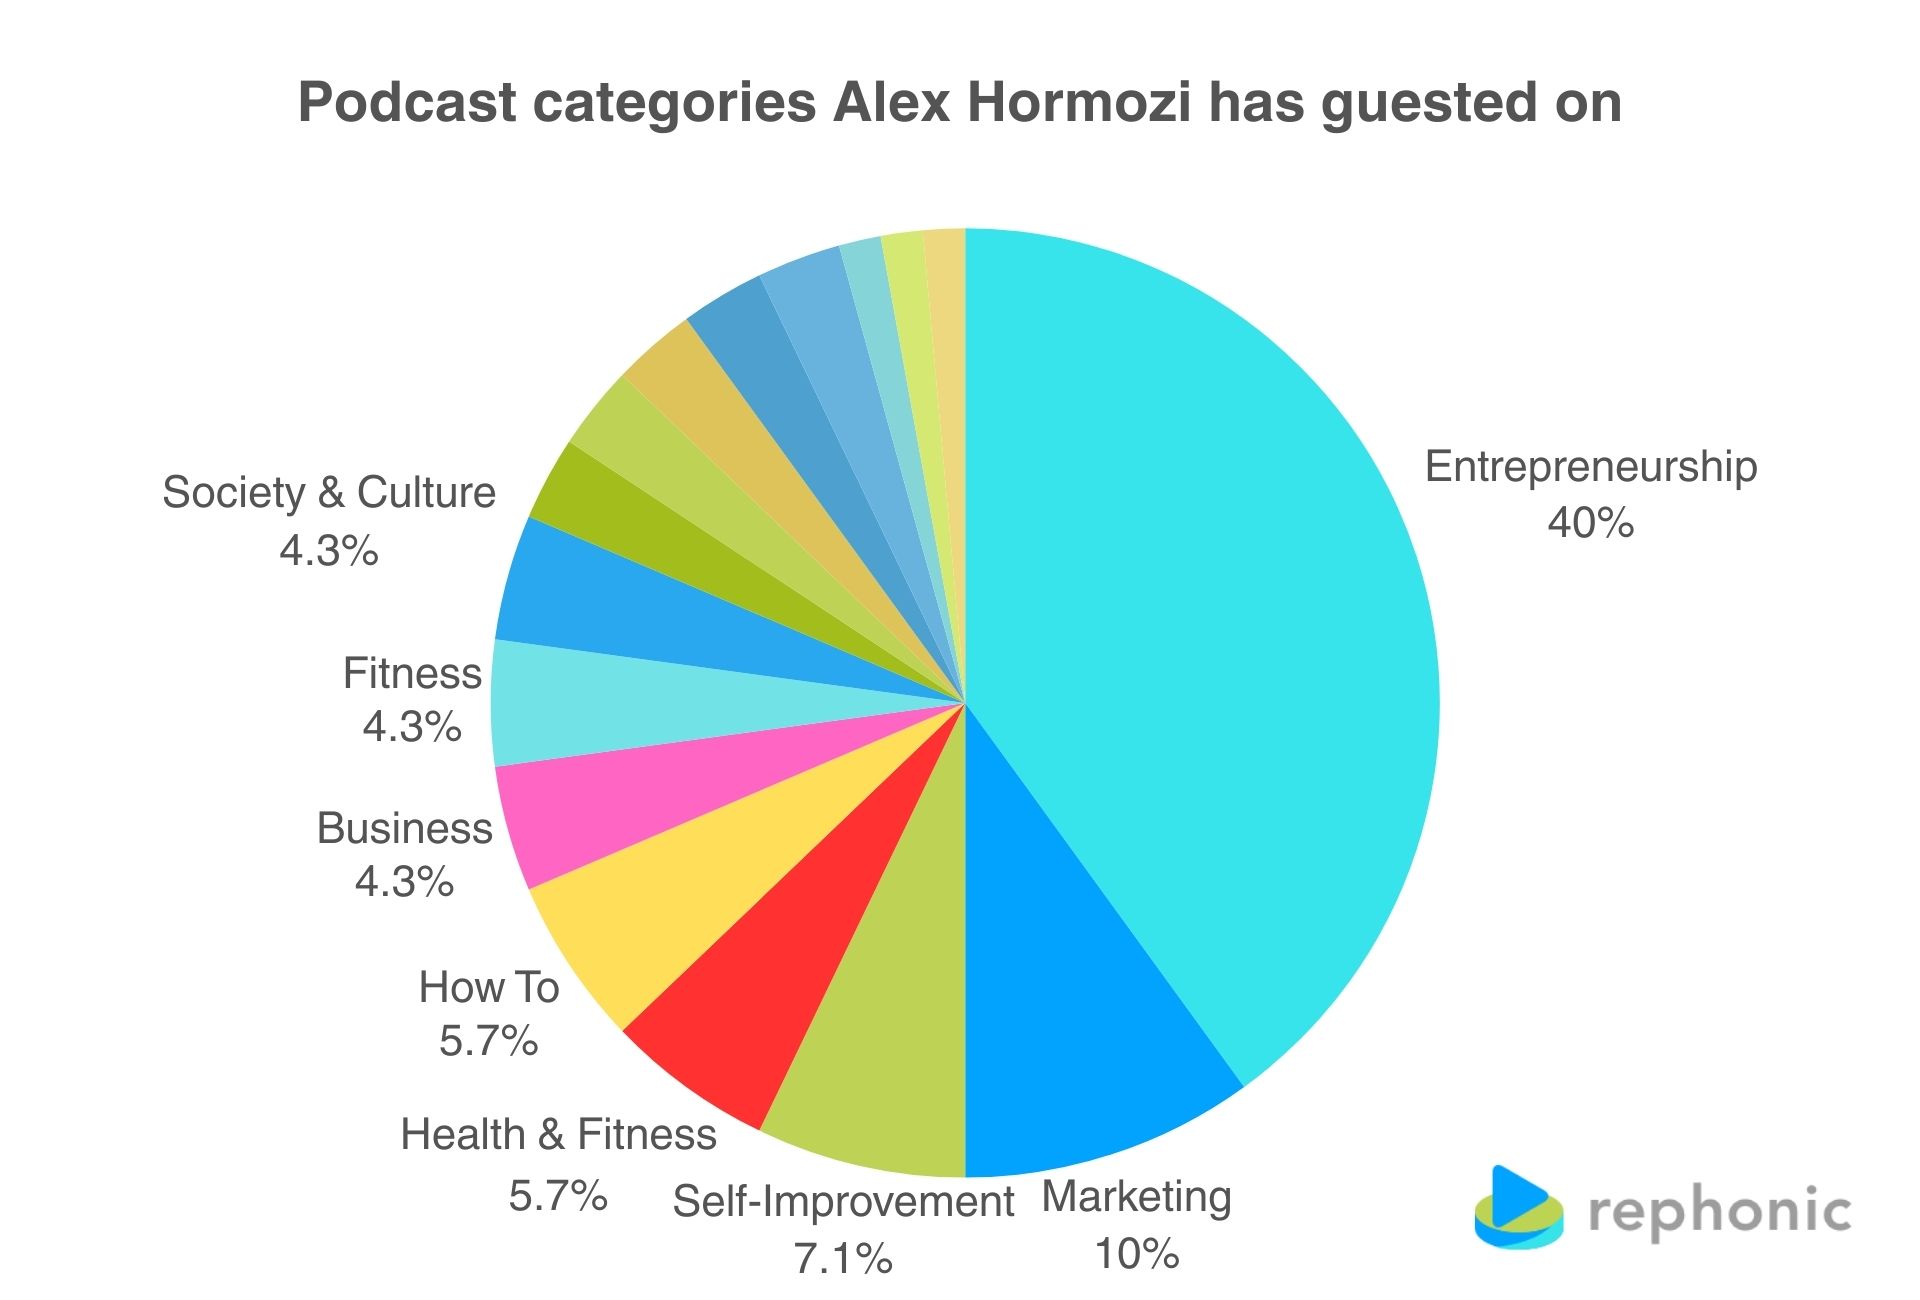 Alex Hormozi's Podcast Guesting Strategy (Revealed)